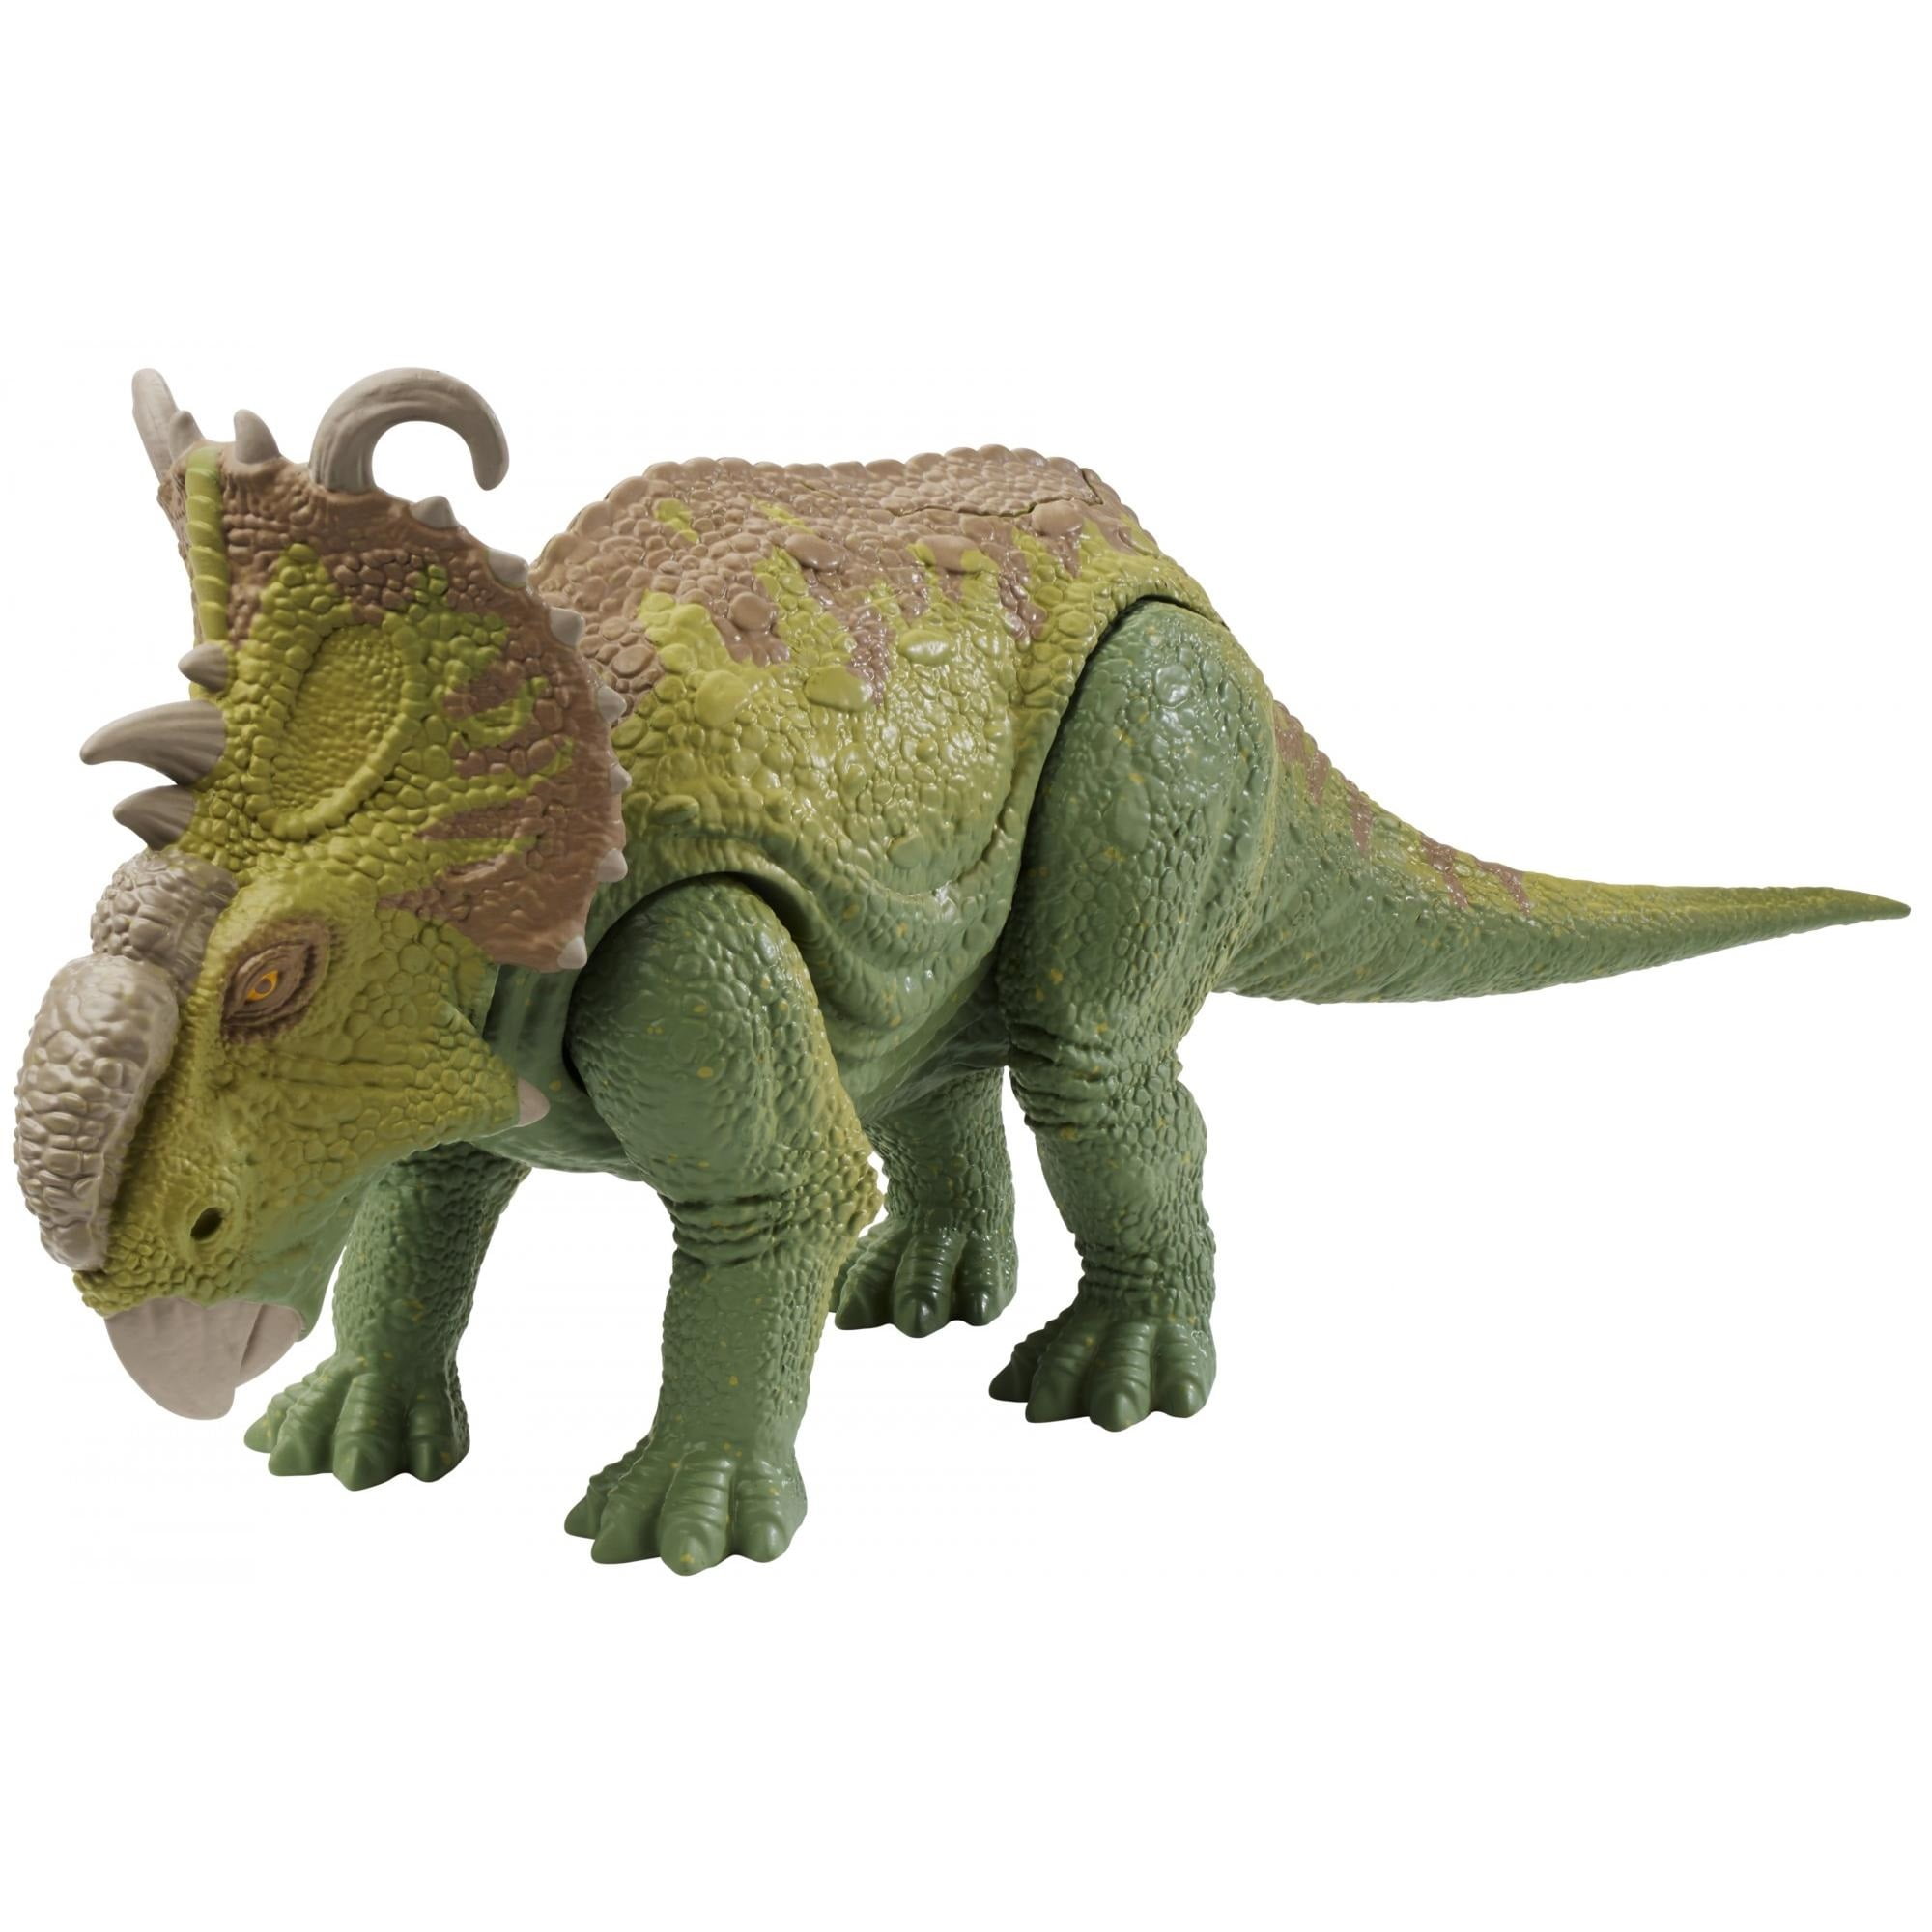 Jurassic Dinosaurs Pachyrhinosaurus Kids Animal Model Figure Educational Toy 